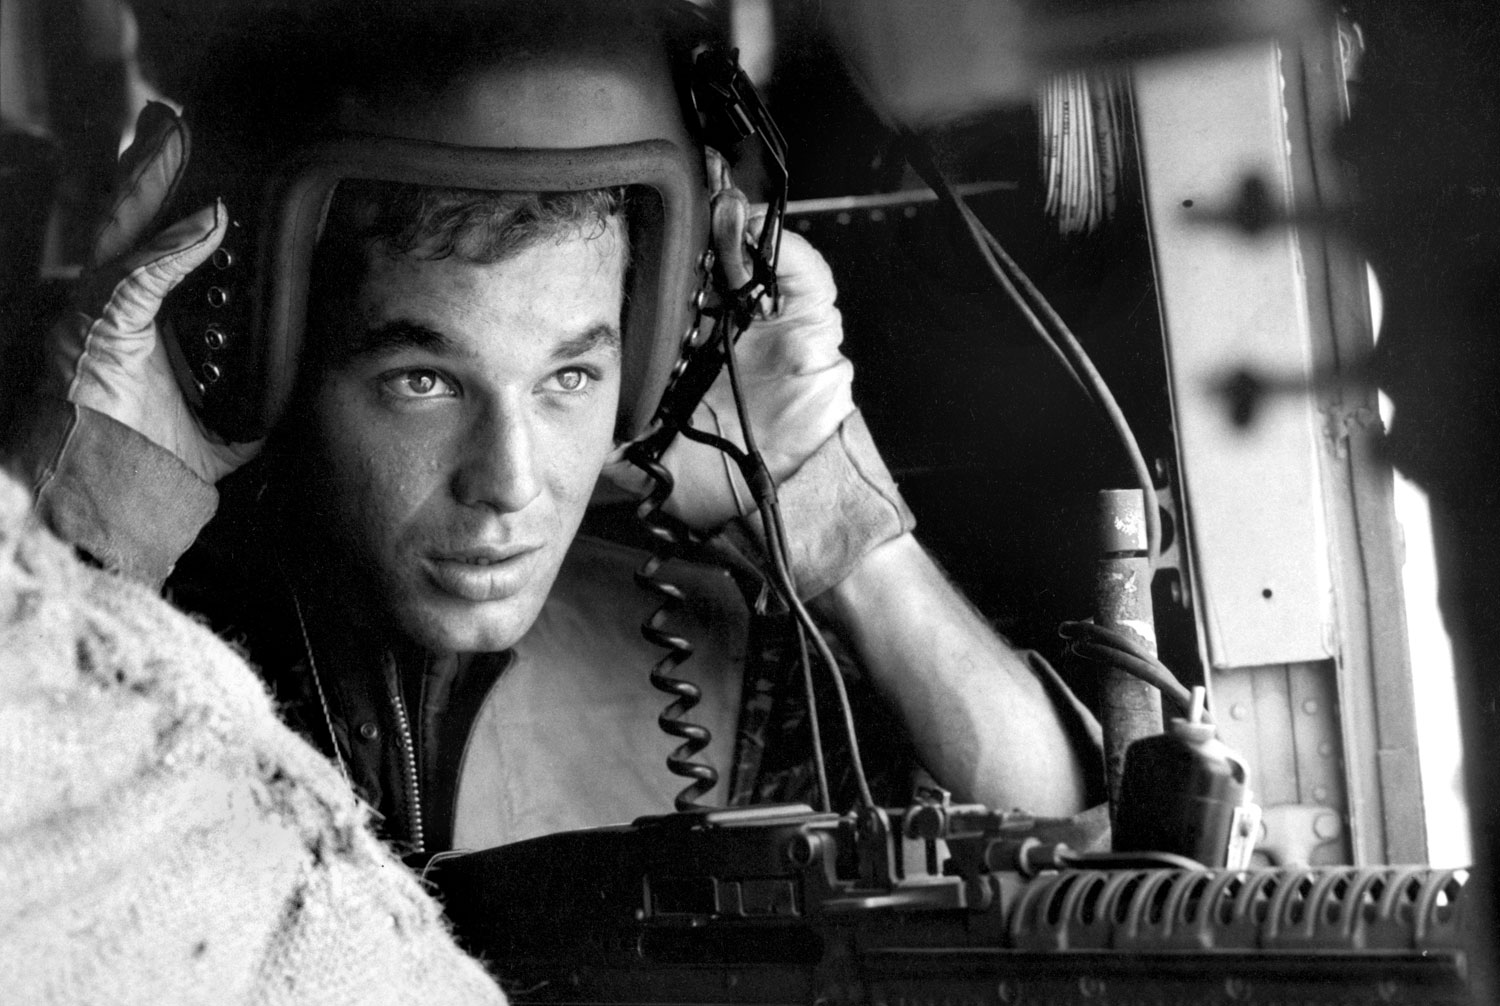 Lance Cpl. James C. Farley, helicopter crew chief, Vietnam, 1965.